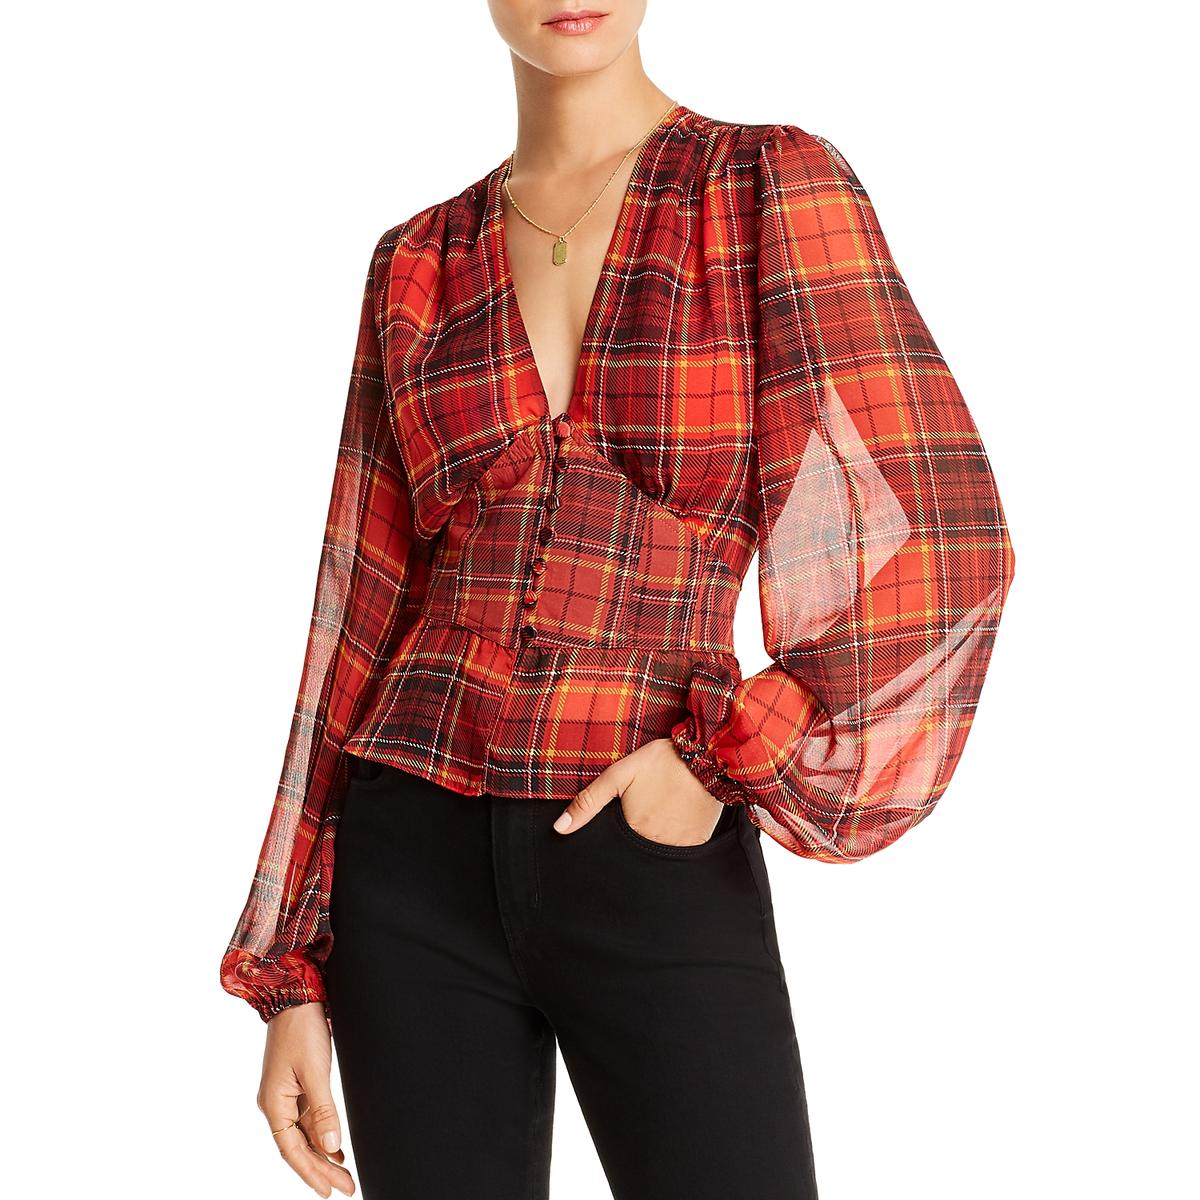 LINI Womens Taylor Red Plaid Peplum Blouse Top Shirt XS BHFO 7308 | eBay